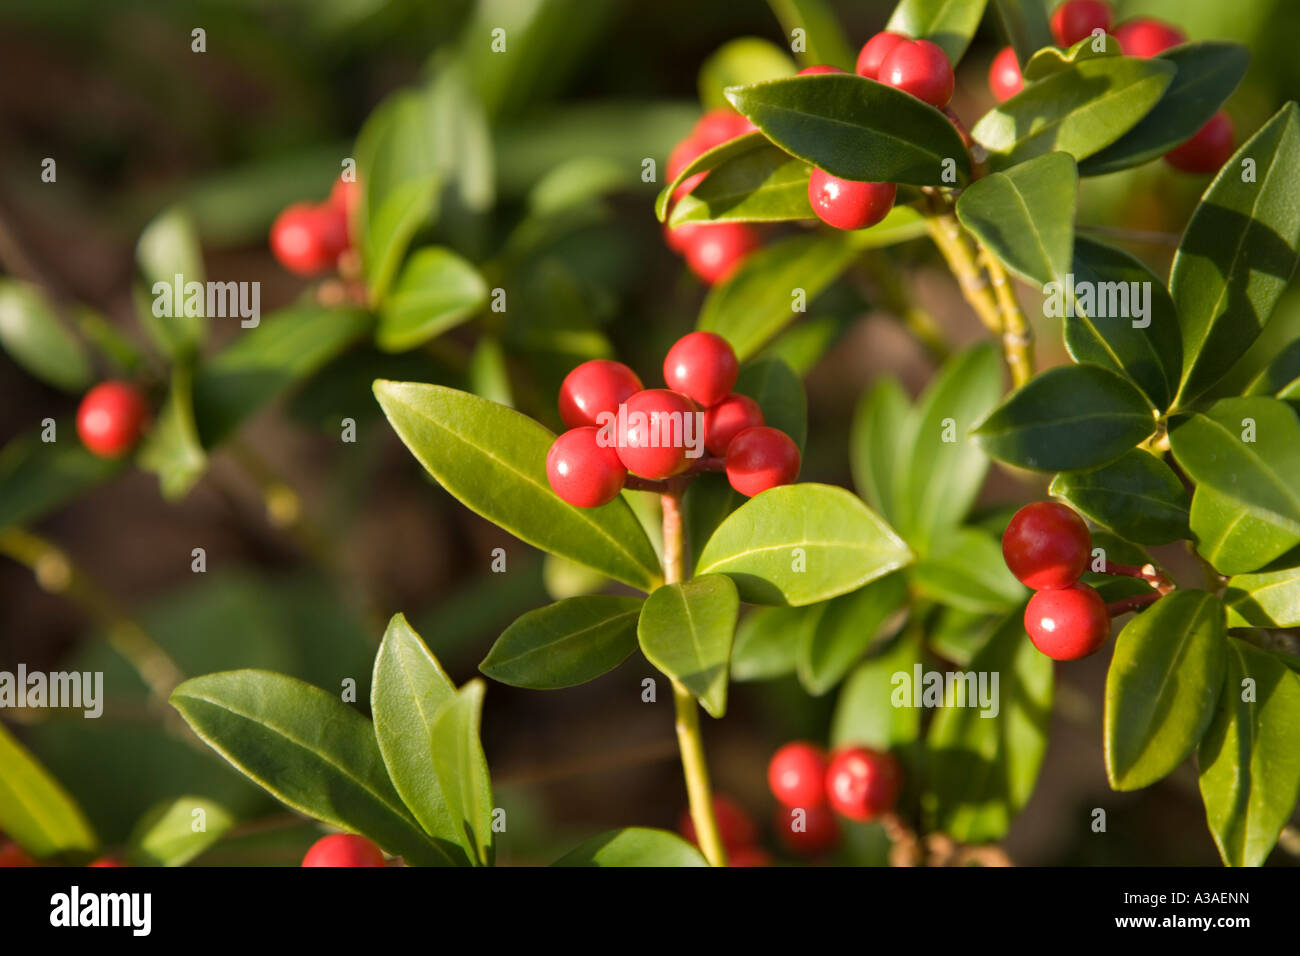 Skimmia Pflanze mit roten Beeren Stockfotografie - Alamy